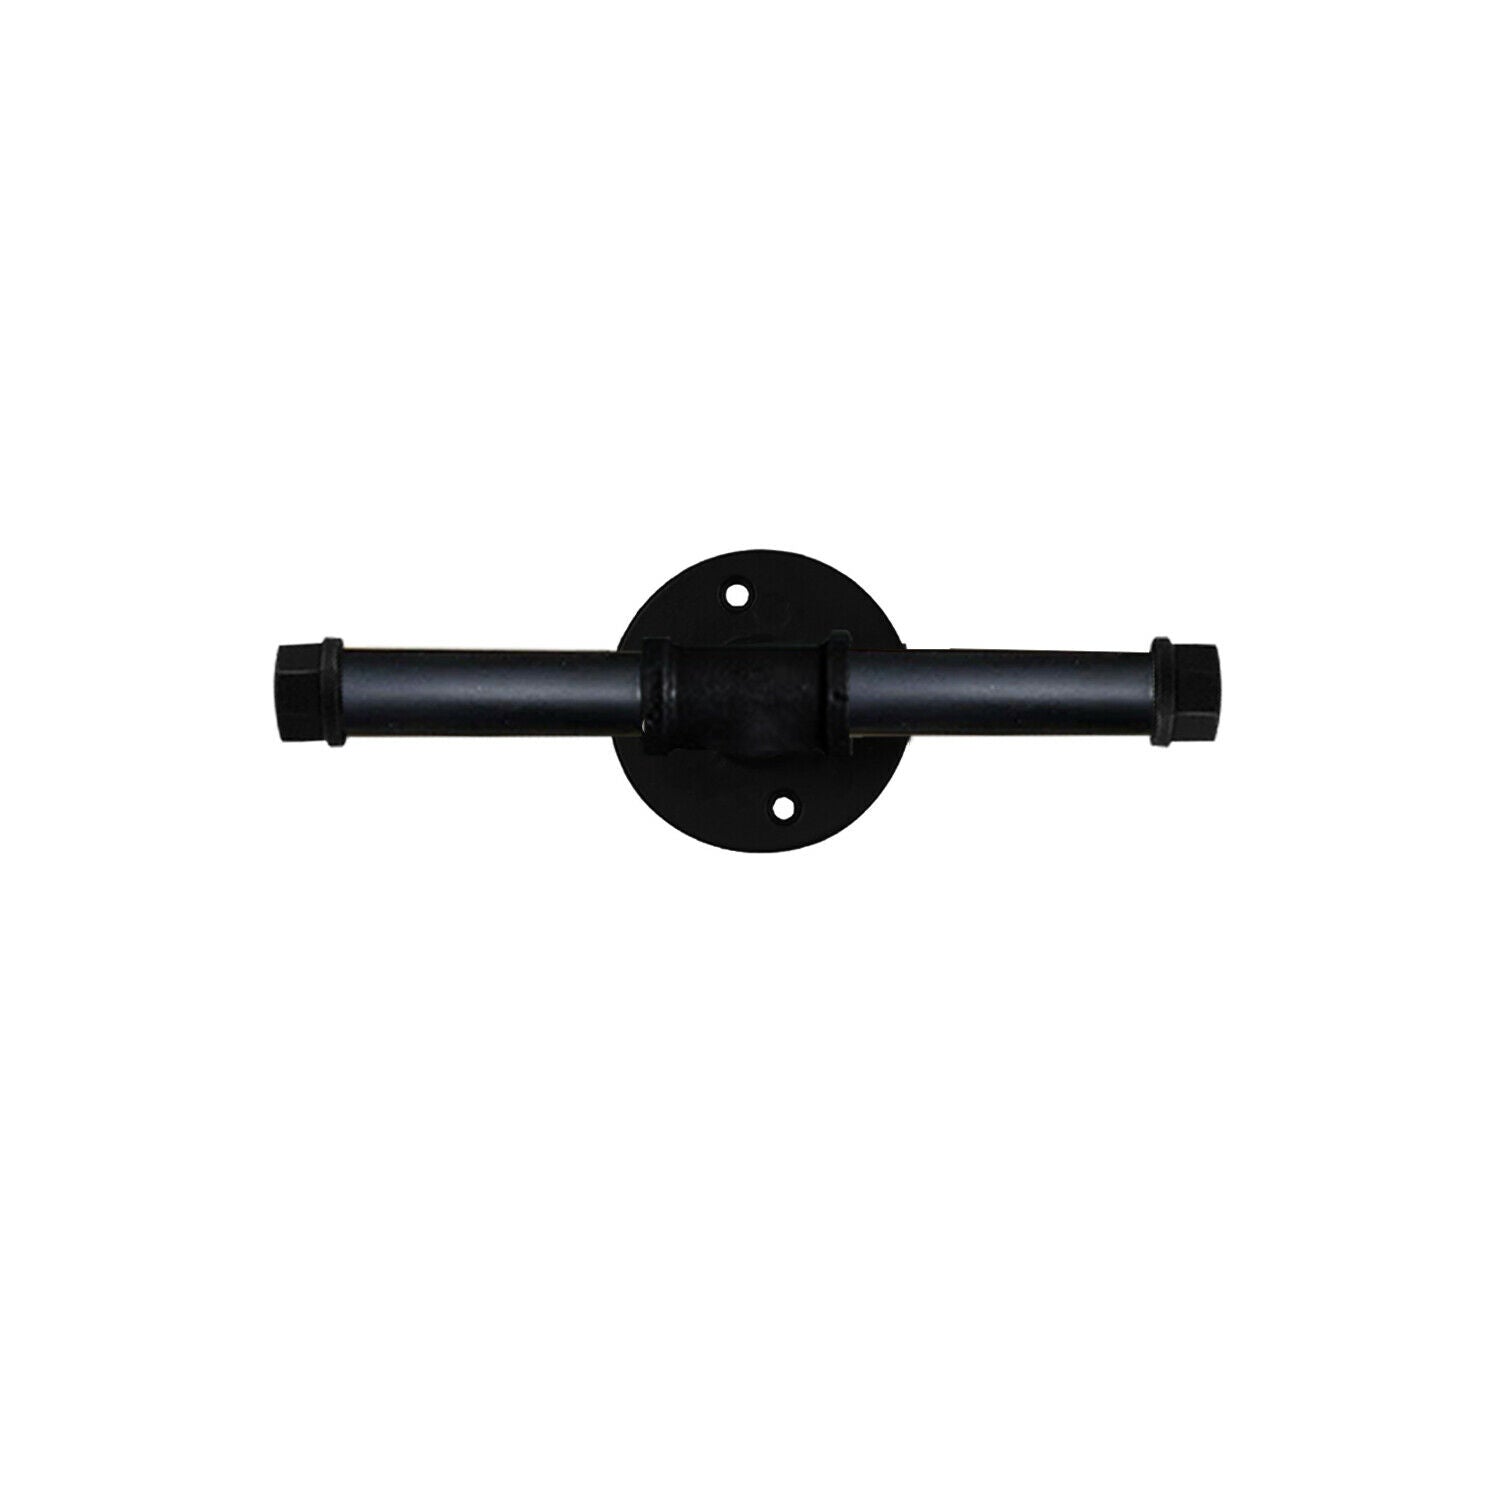 LEDSone Industrial Iron Black Towel Rail Hanging Holder 20mm Pipe Fitting Hanger~3560 - LEDSone UK Ltd